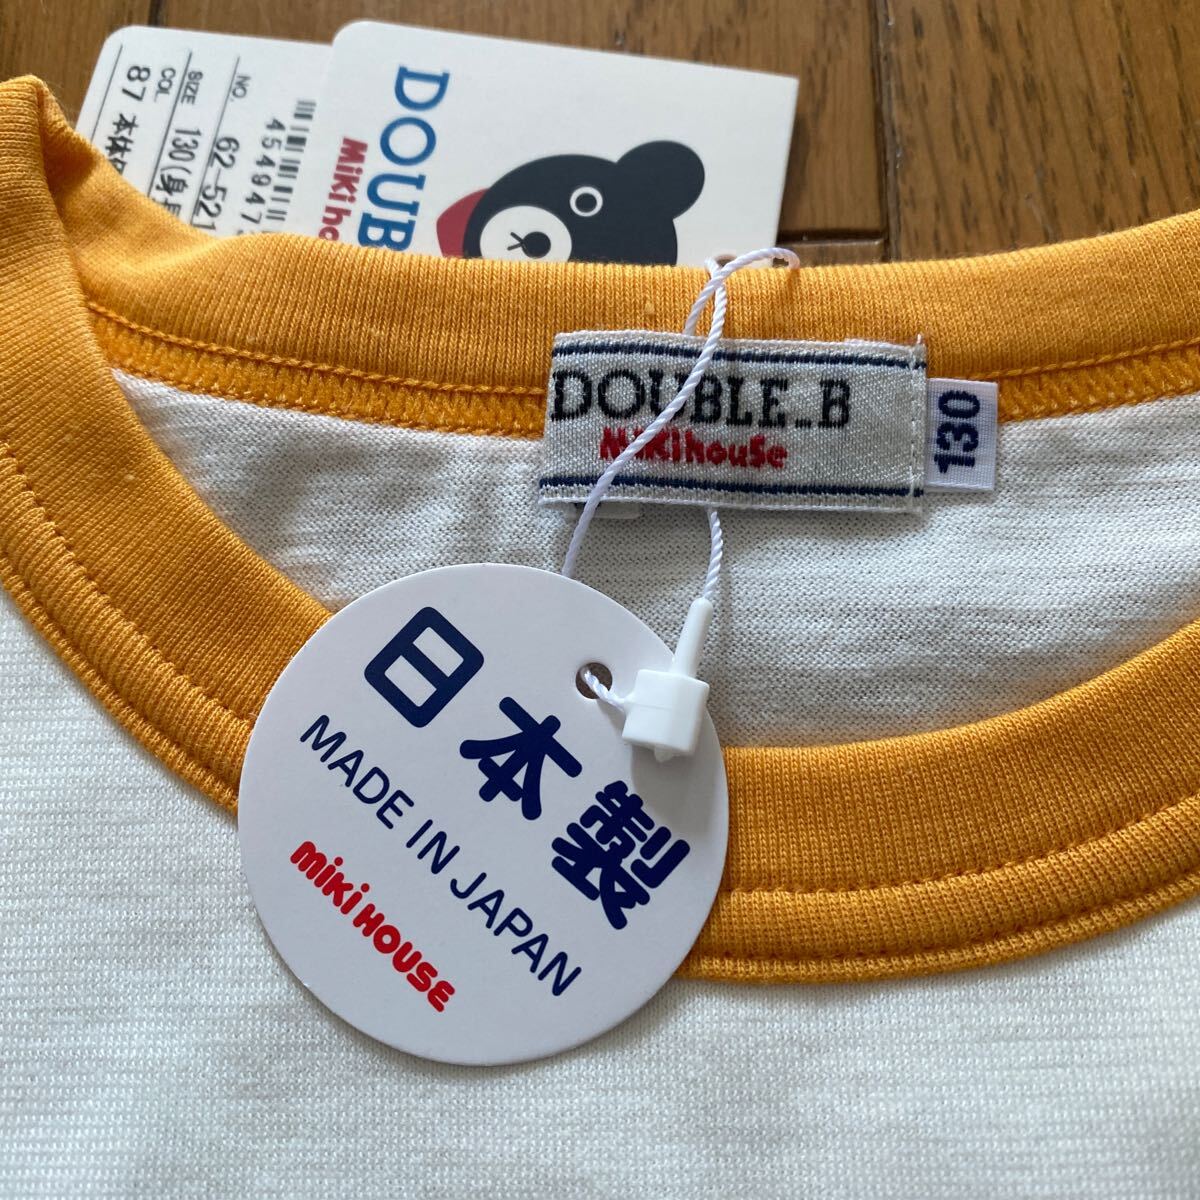 SALE 新品　ミキハウス　日本製　半袖Ｔシャツ　130 白　DOUBLE B Tシャツ 子供服